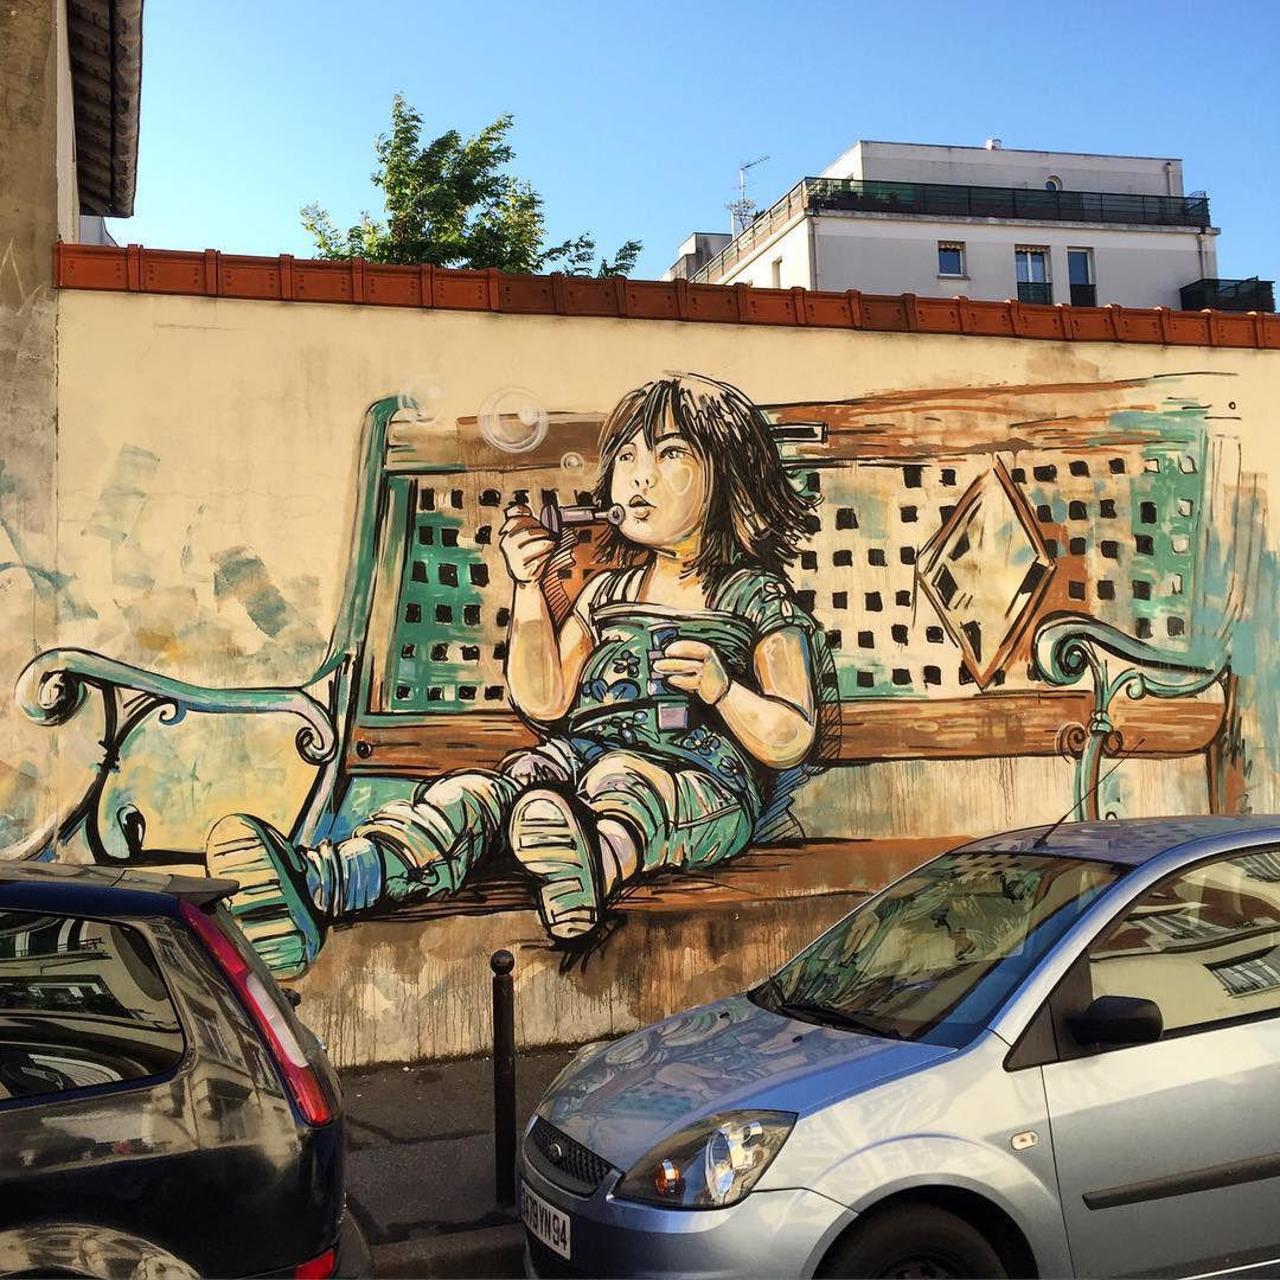 http://ift.tt/1KiqpQt #Paris #graffiti photo by jeanlucr http://ift.tt/1PyzeJw #StreetArt http://t.co/tPXXfPZmSv